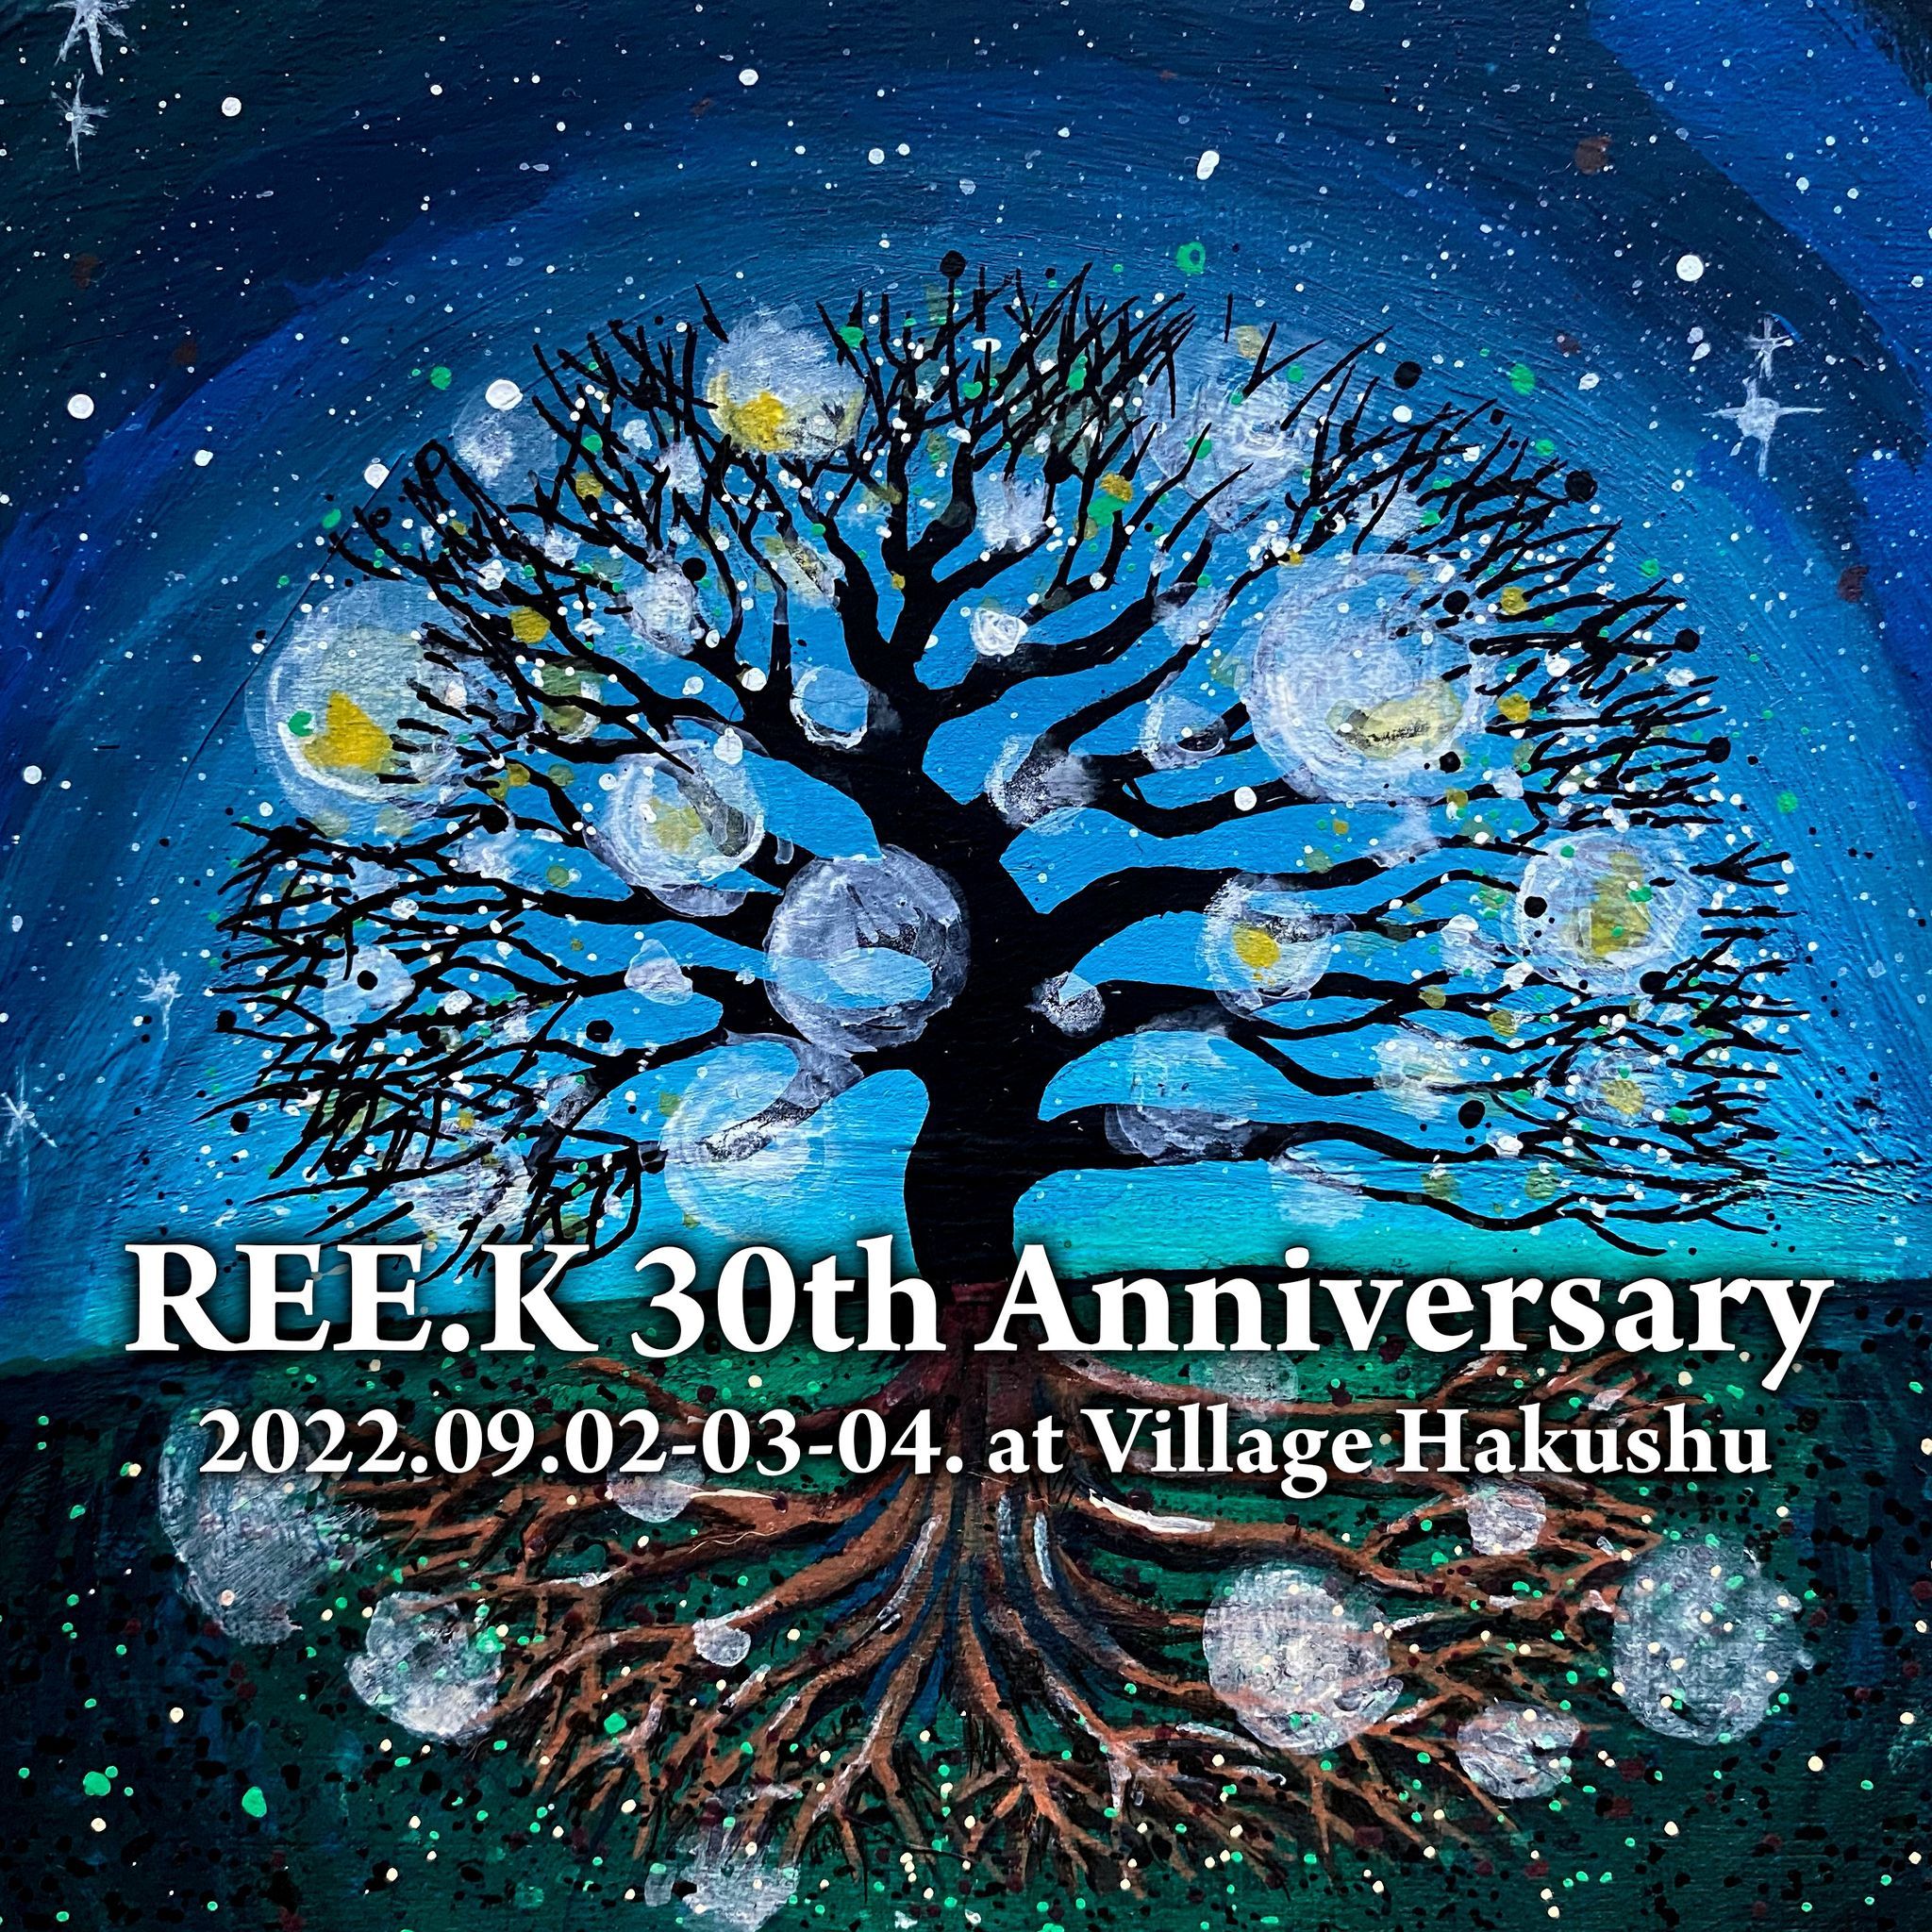 REE.K 30th Anniversary